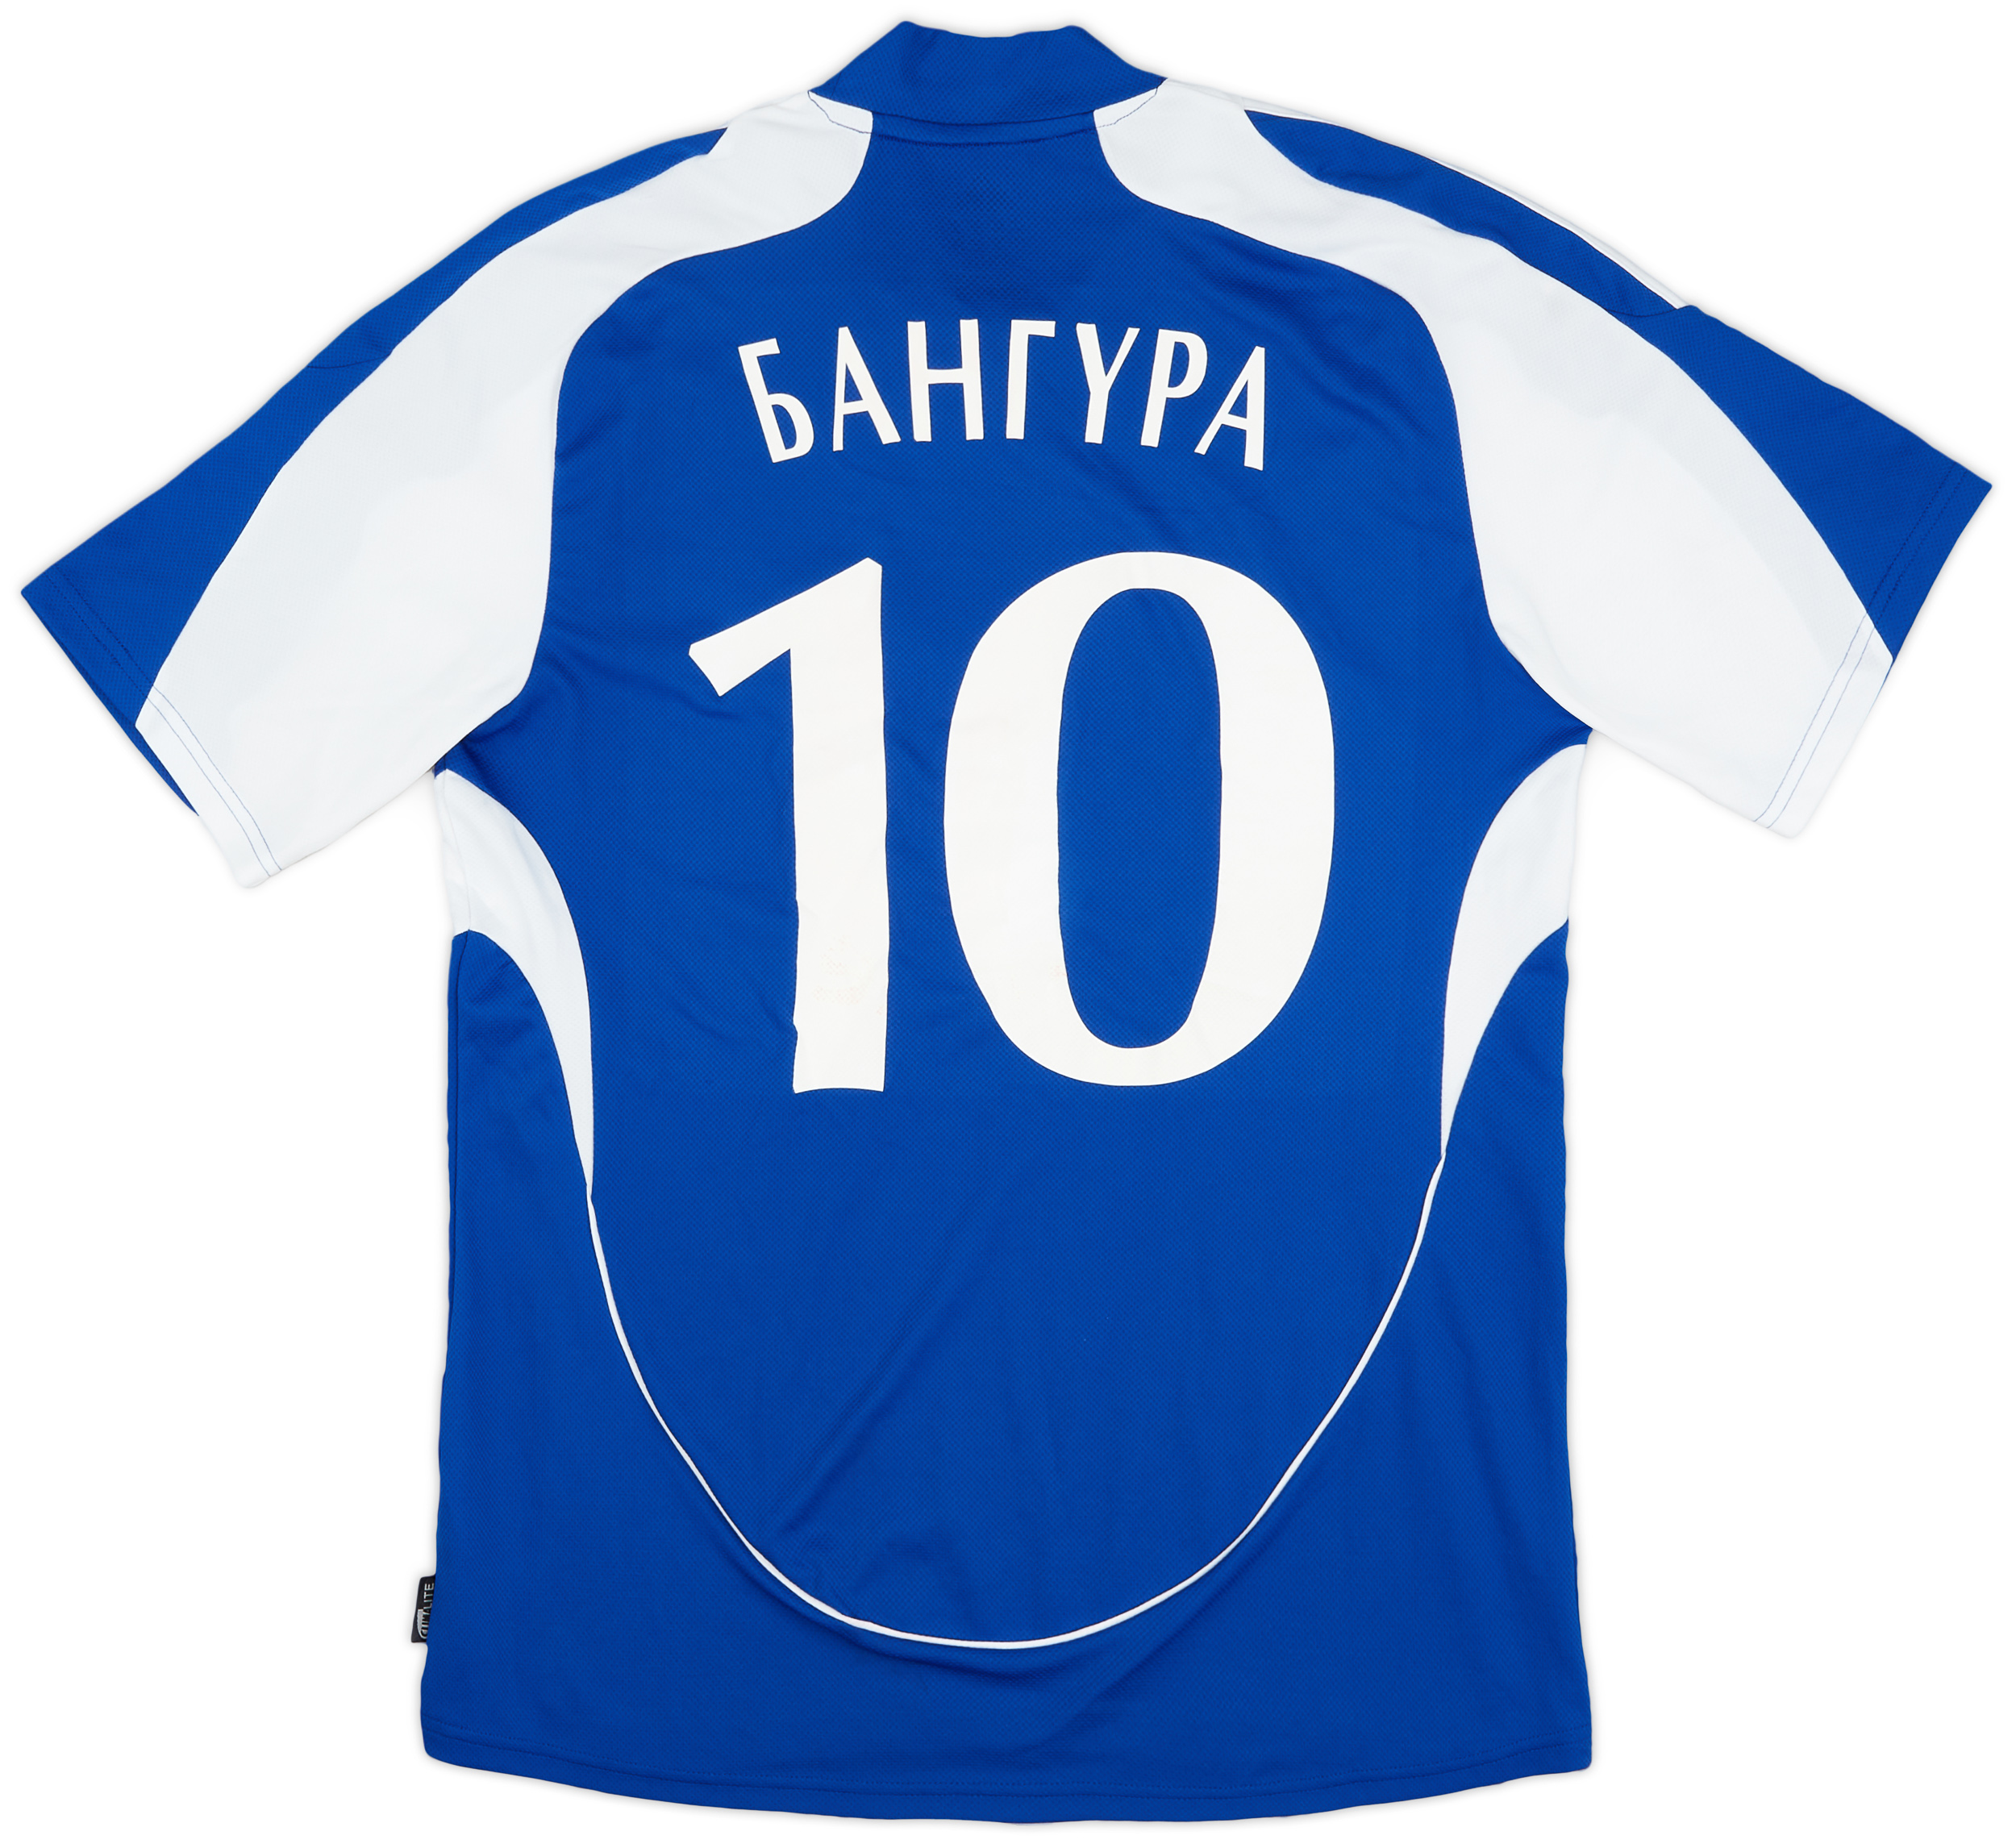 Dynamo Kiev  Away shirt (Original)